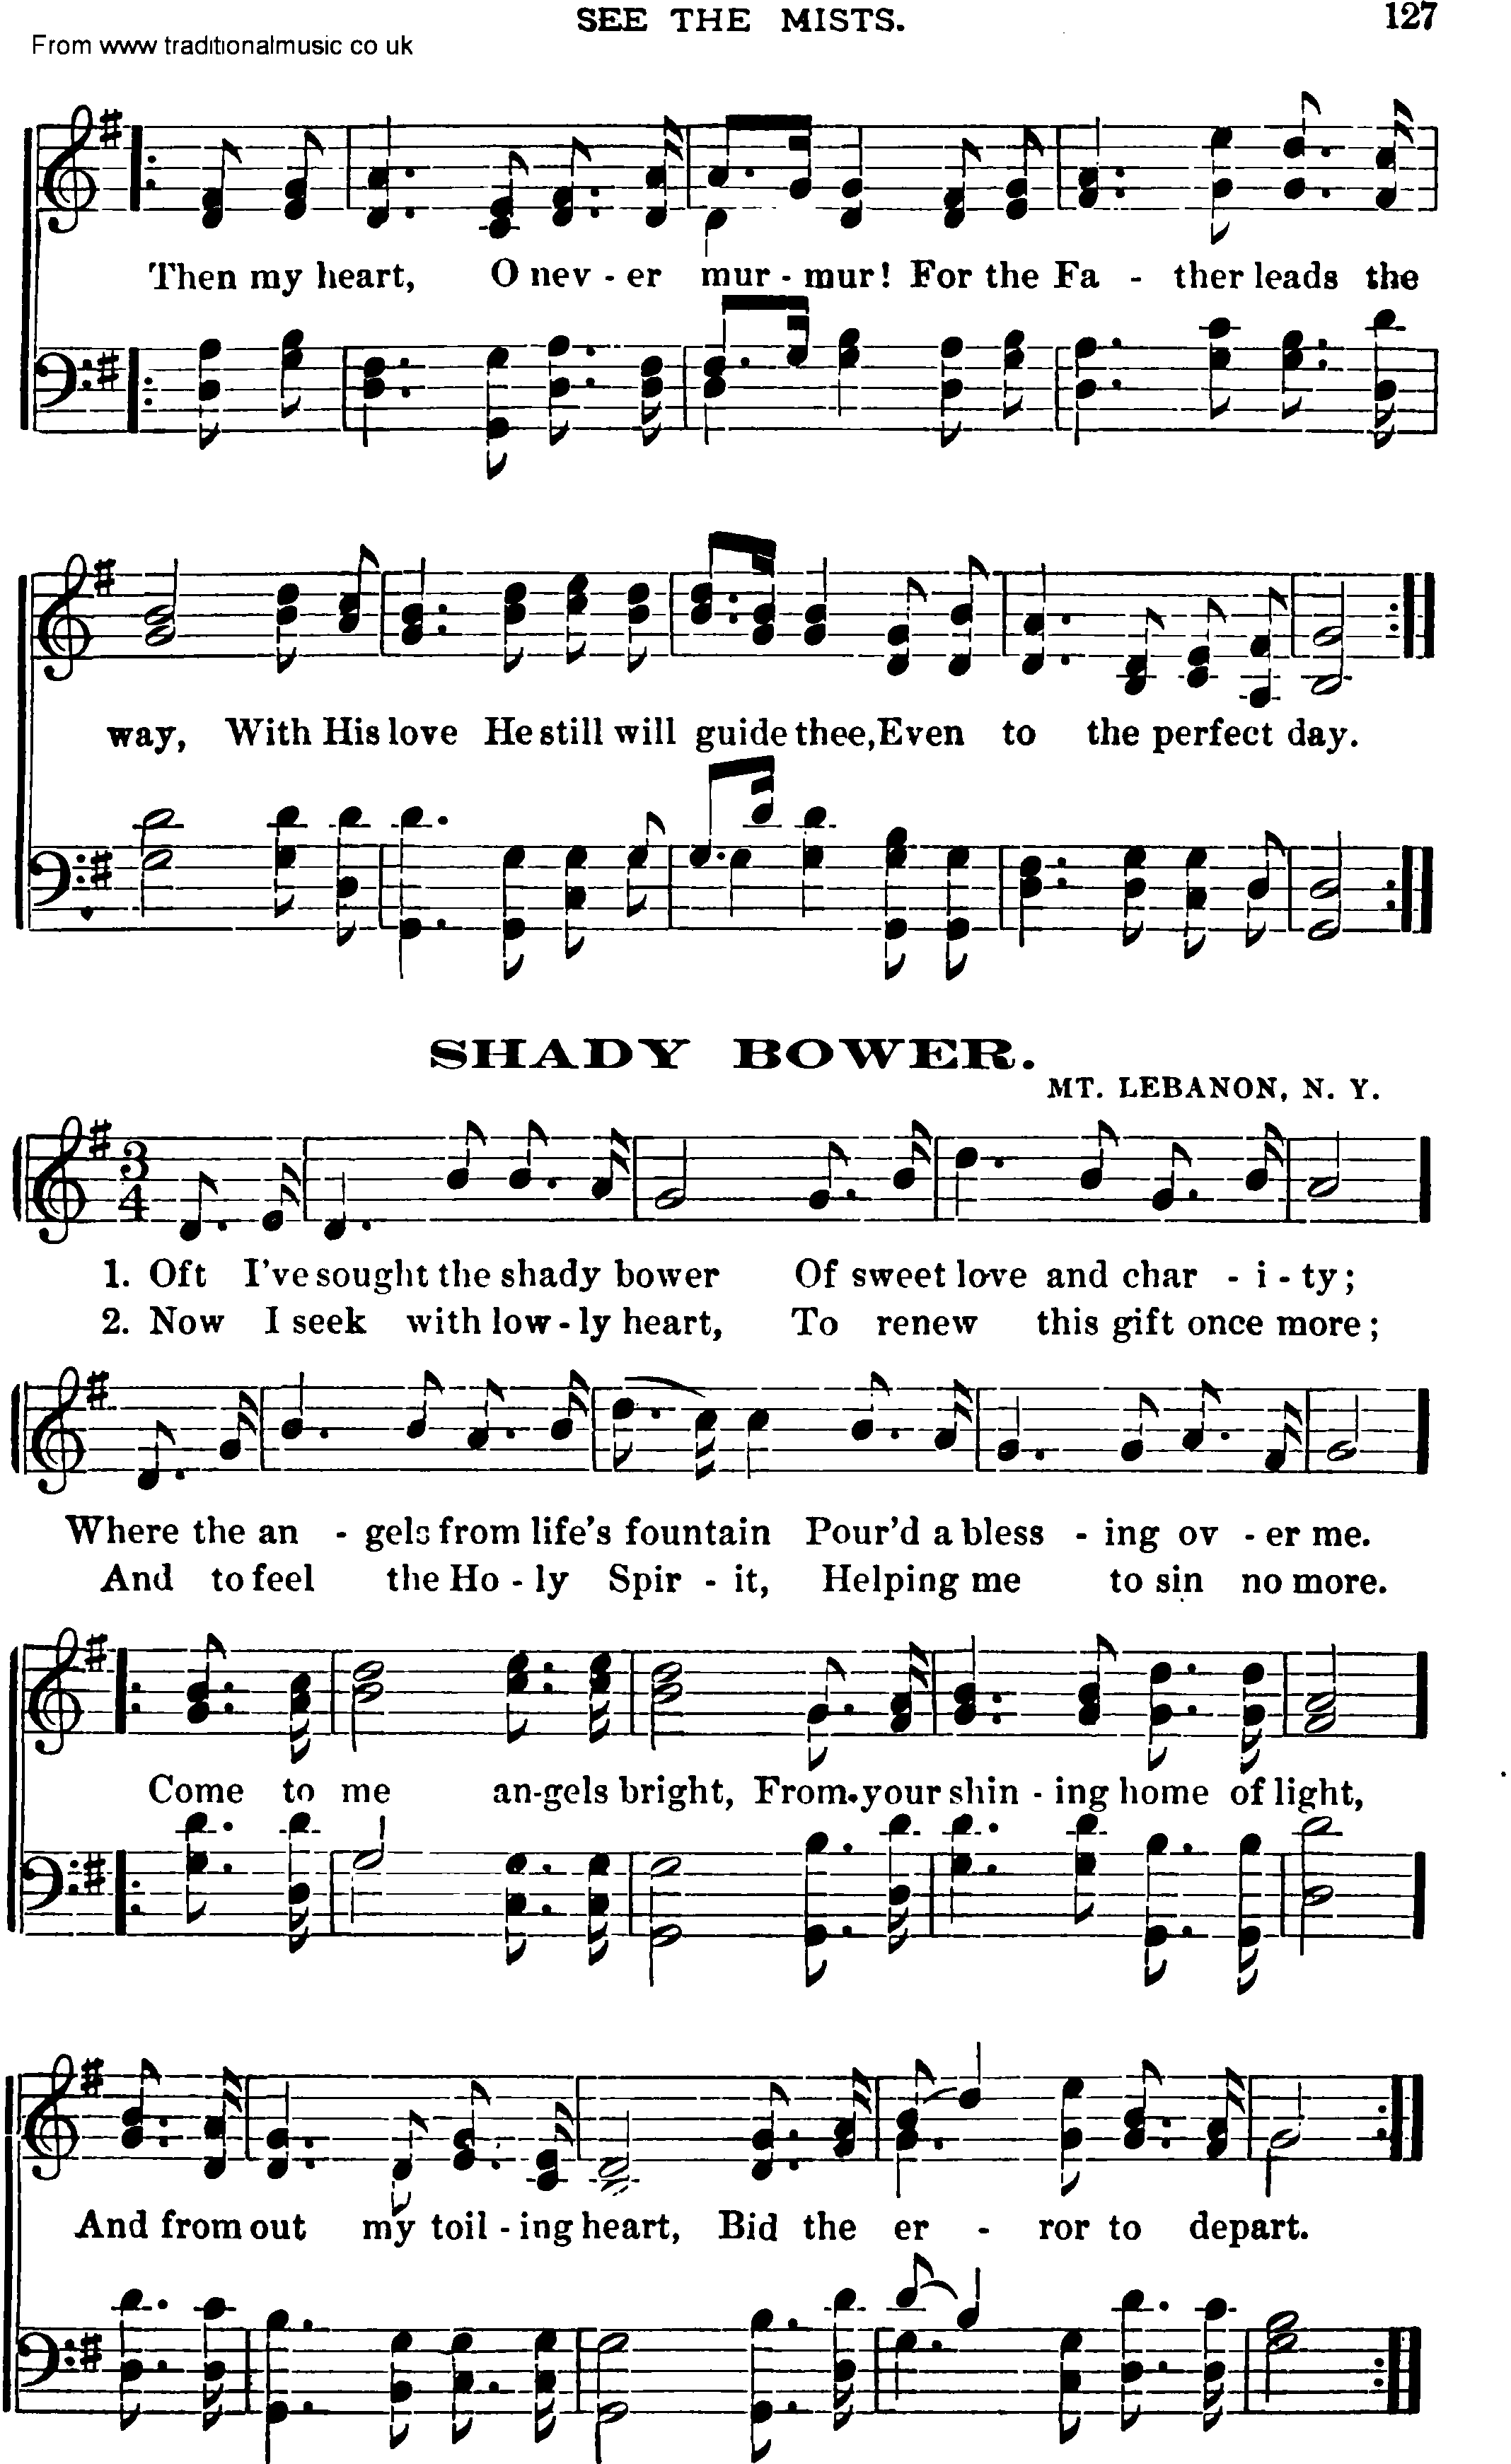 Shaker Music collection, Hymn: Shade Bower, sheetmusic and PDF